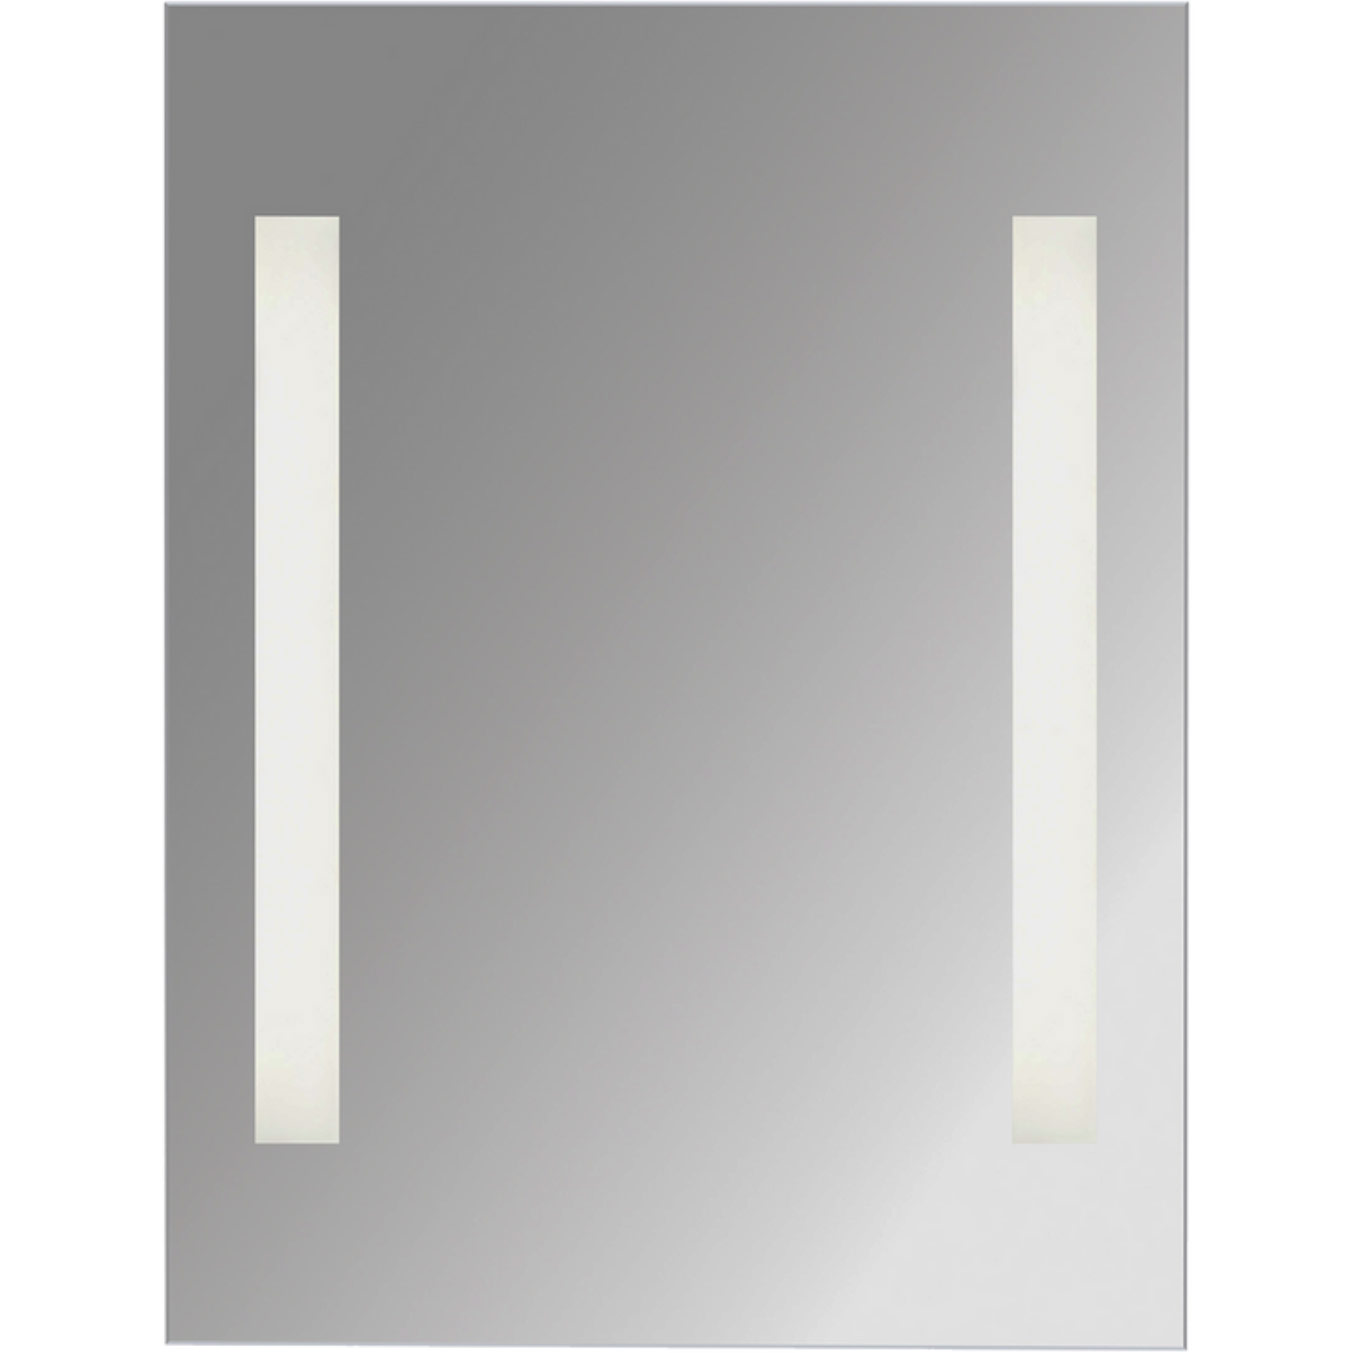 TL Reflection Mirror by Visual Comfort Modern | 700VNRFL-LED930 TLG402961